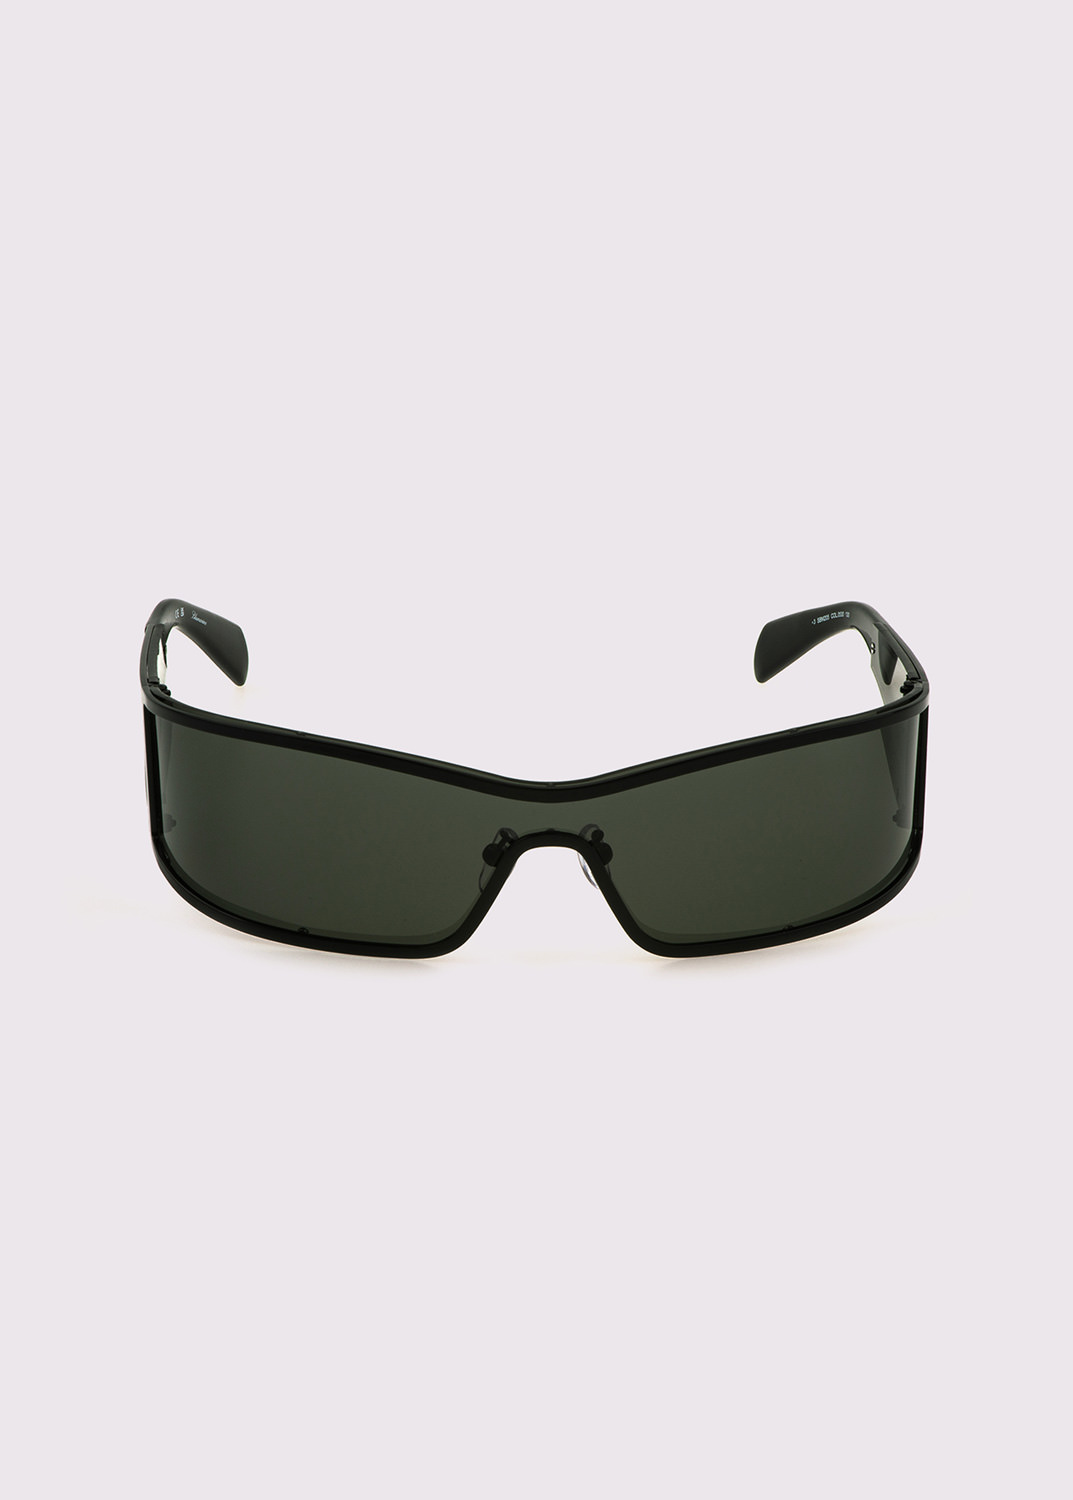 Women's Sunglasses: Cat-eye, oval, round-shaped